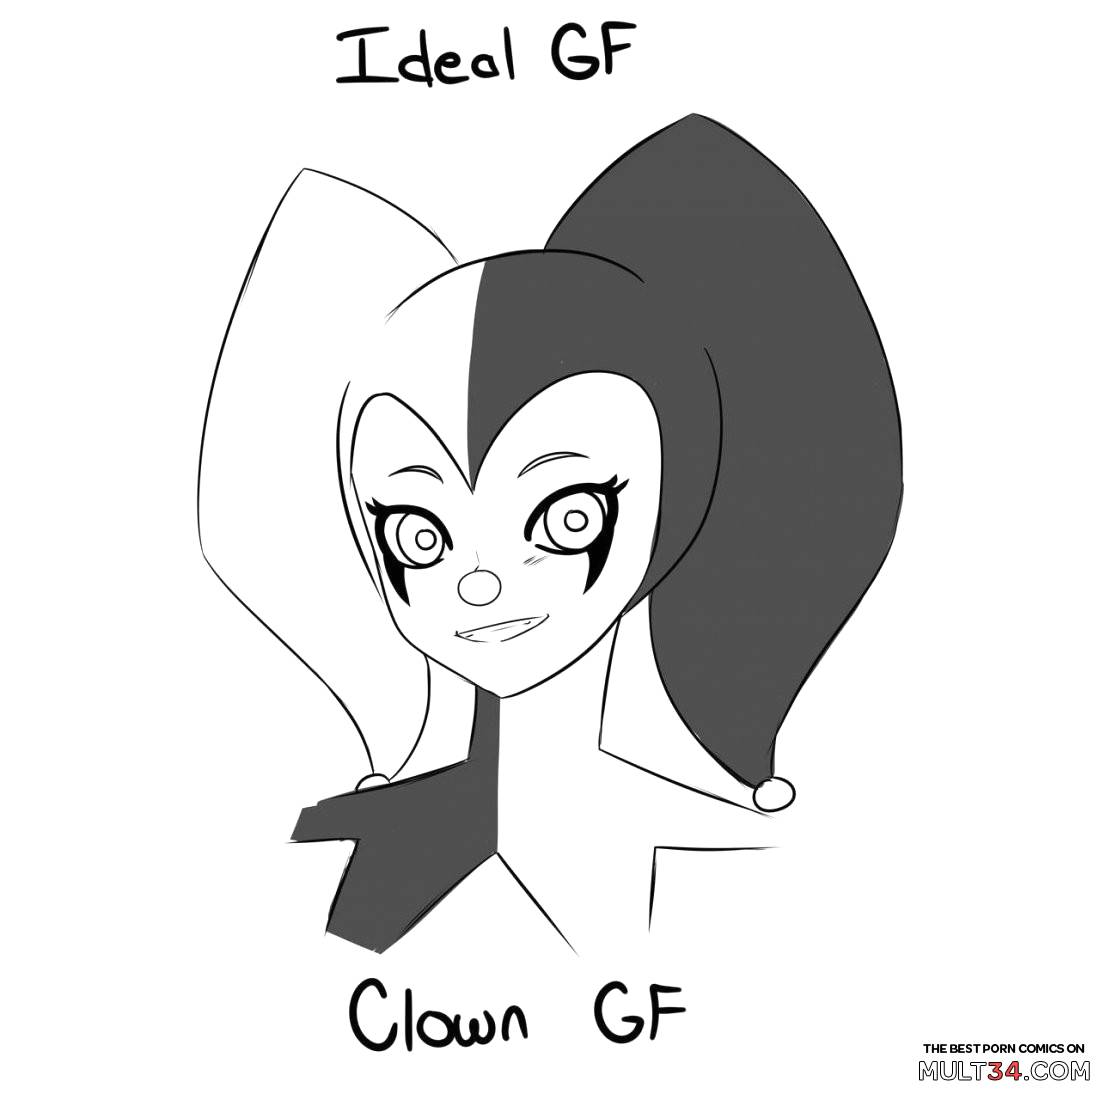 Ideal GF: Clown GF page 1